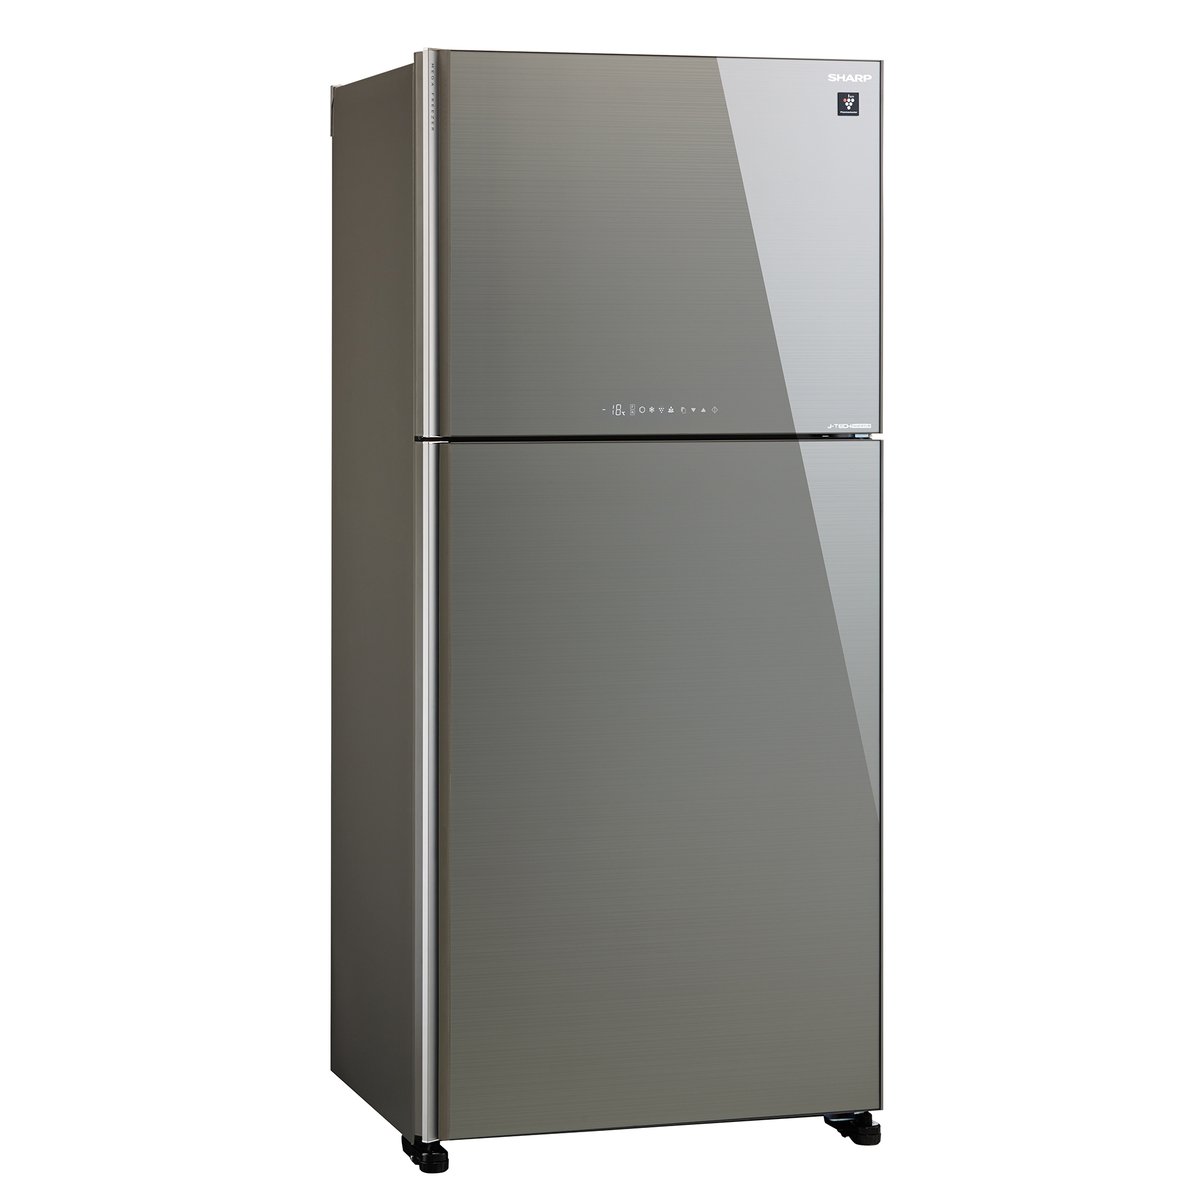 Sharp E Pro Inverter Series Double Door Refrigerator with Plasmacluster SJ-GMF700-SL3 700LTR